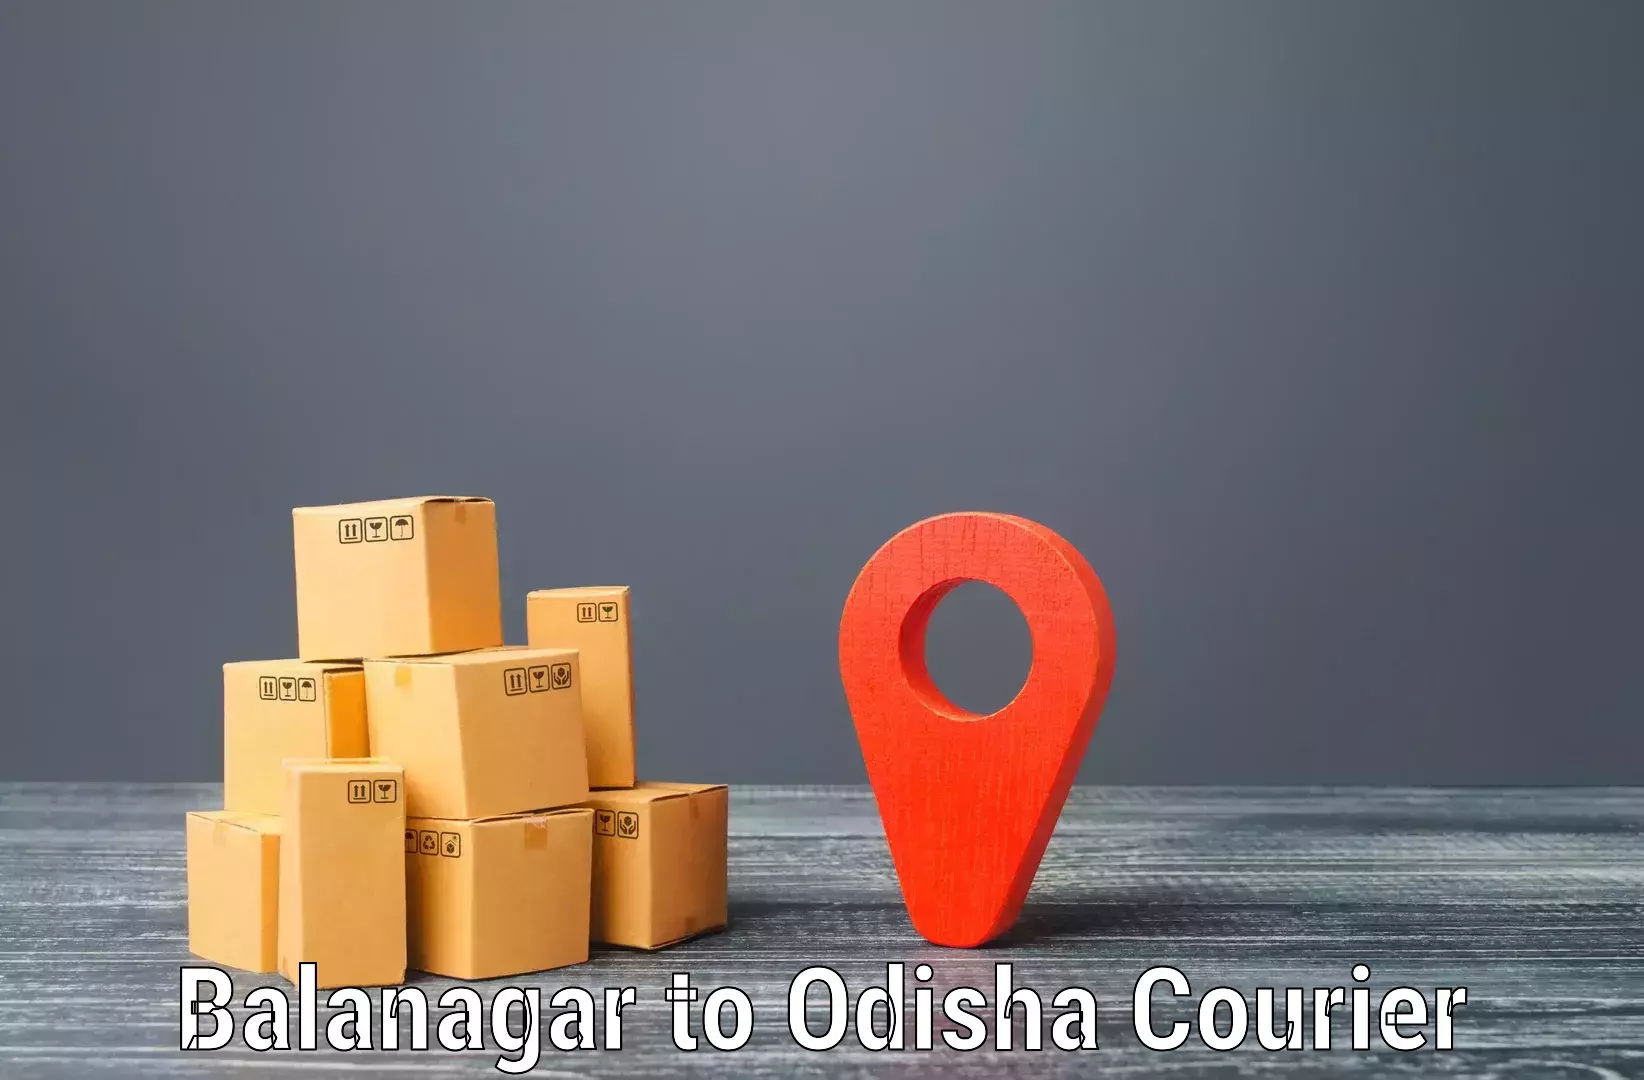 Next-day delivery options Balanagar to Baleswar